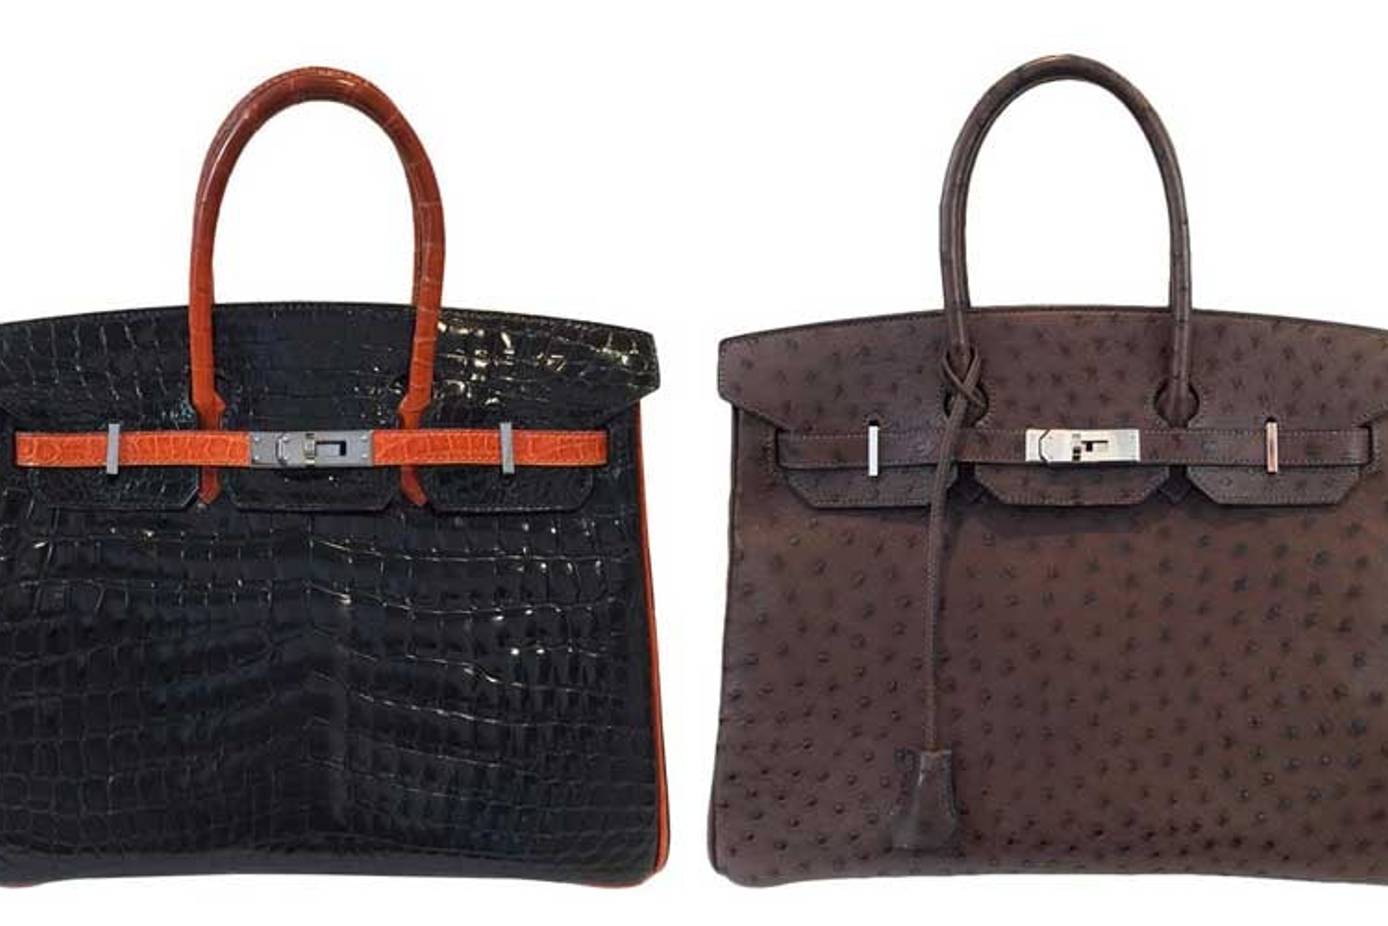 Hermès Birkin bag better investment than gold or stocks